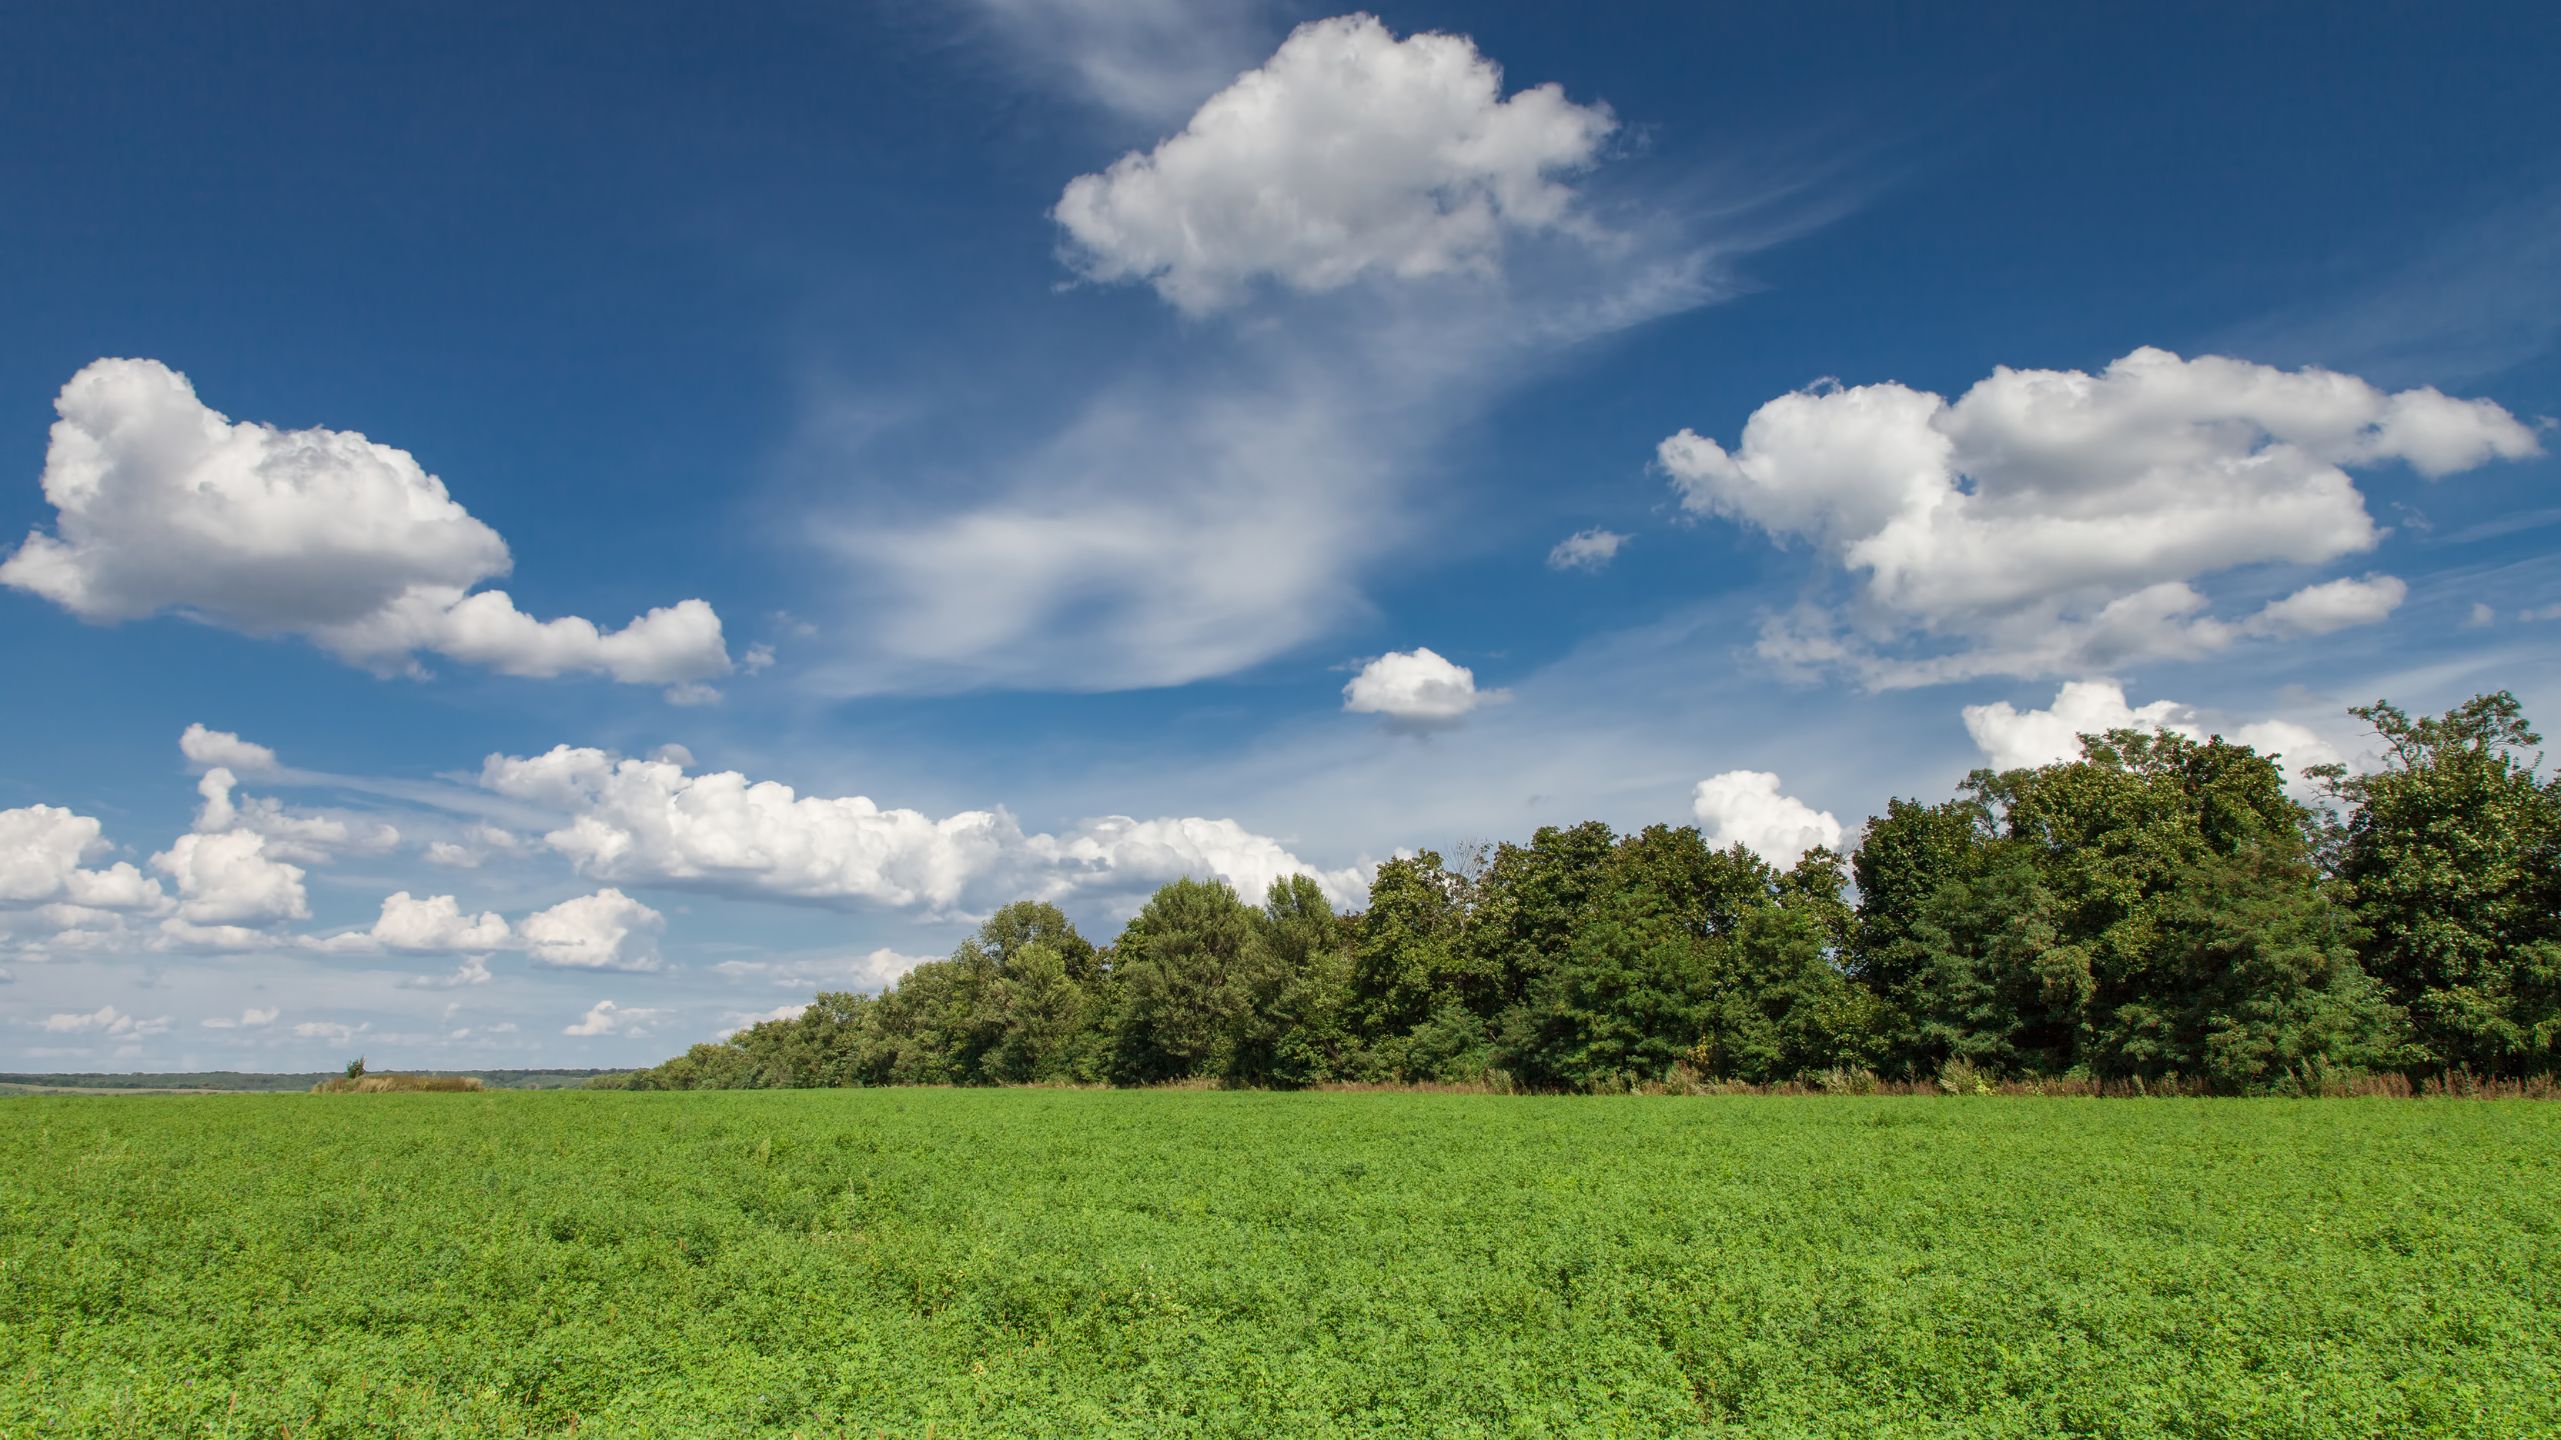 Alfalfa, blue sky, and a tree line